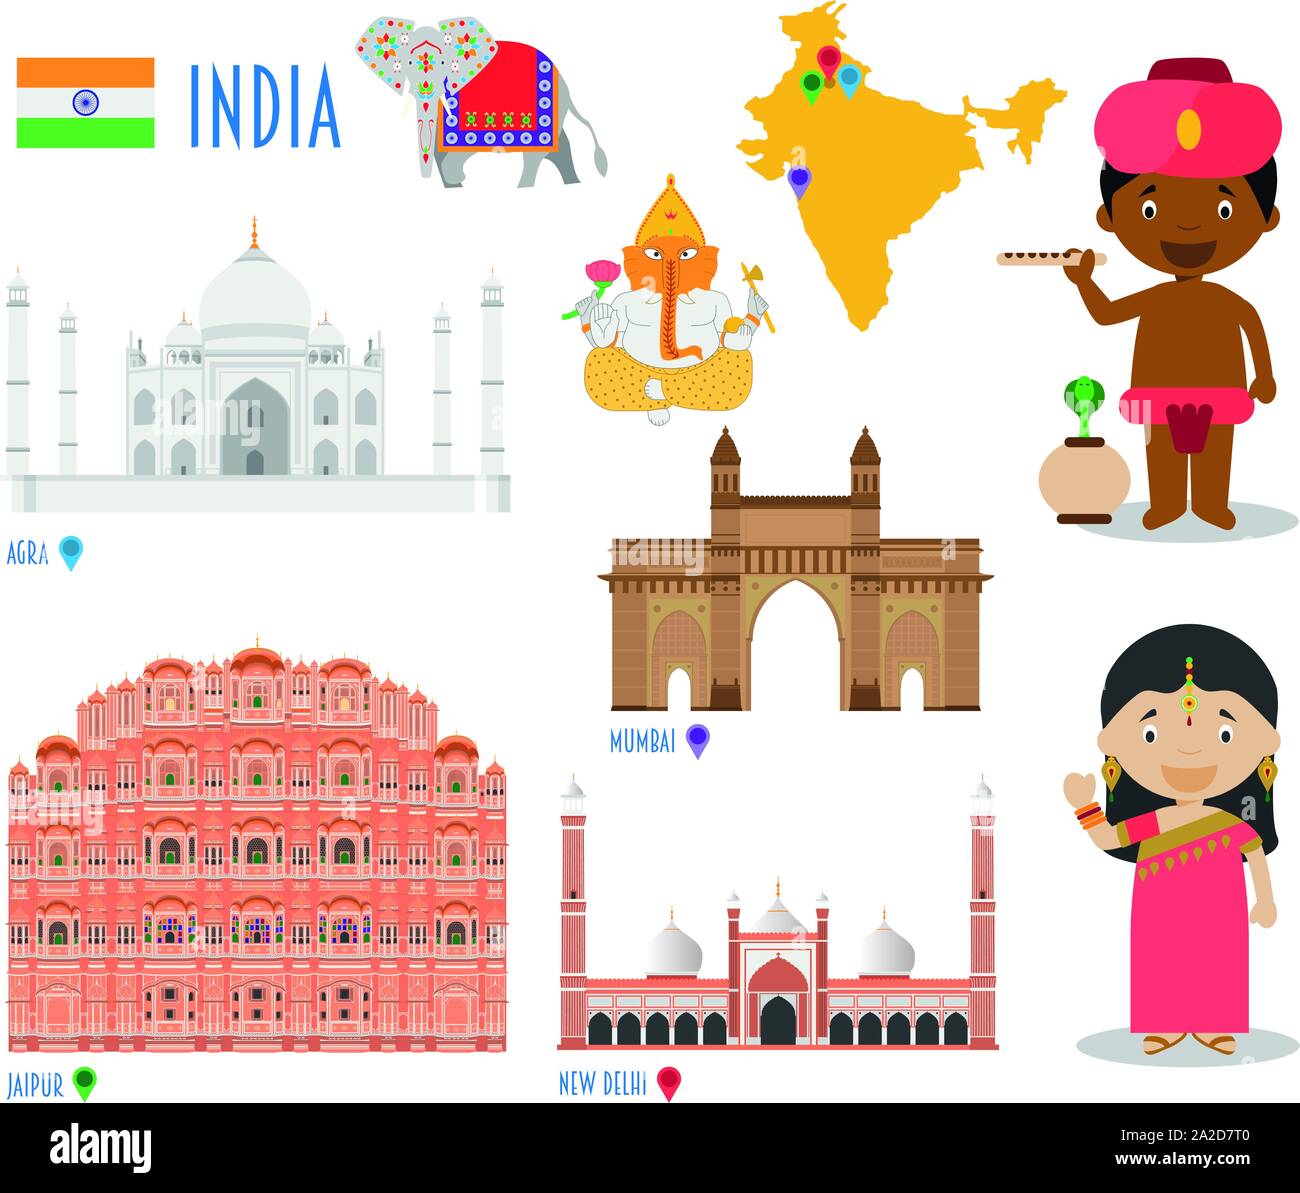 India Flat Icon Set viaggi e turismo concept. Illustrazione Vettoriale Illustrazione Vettoriale